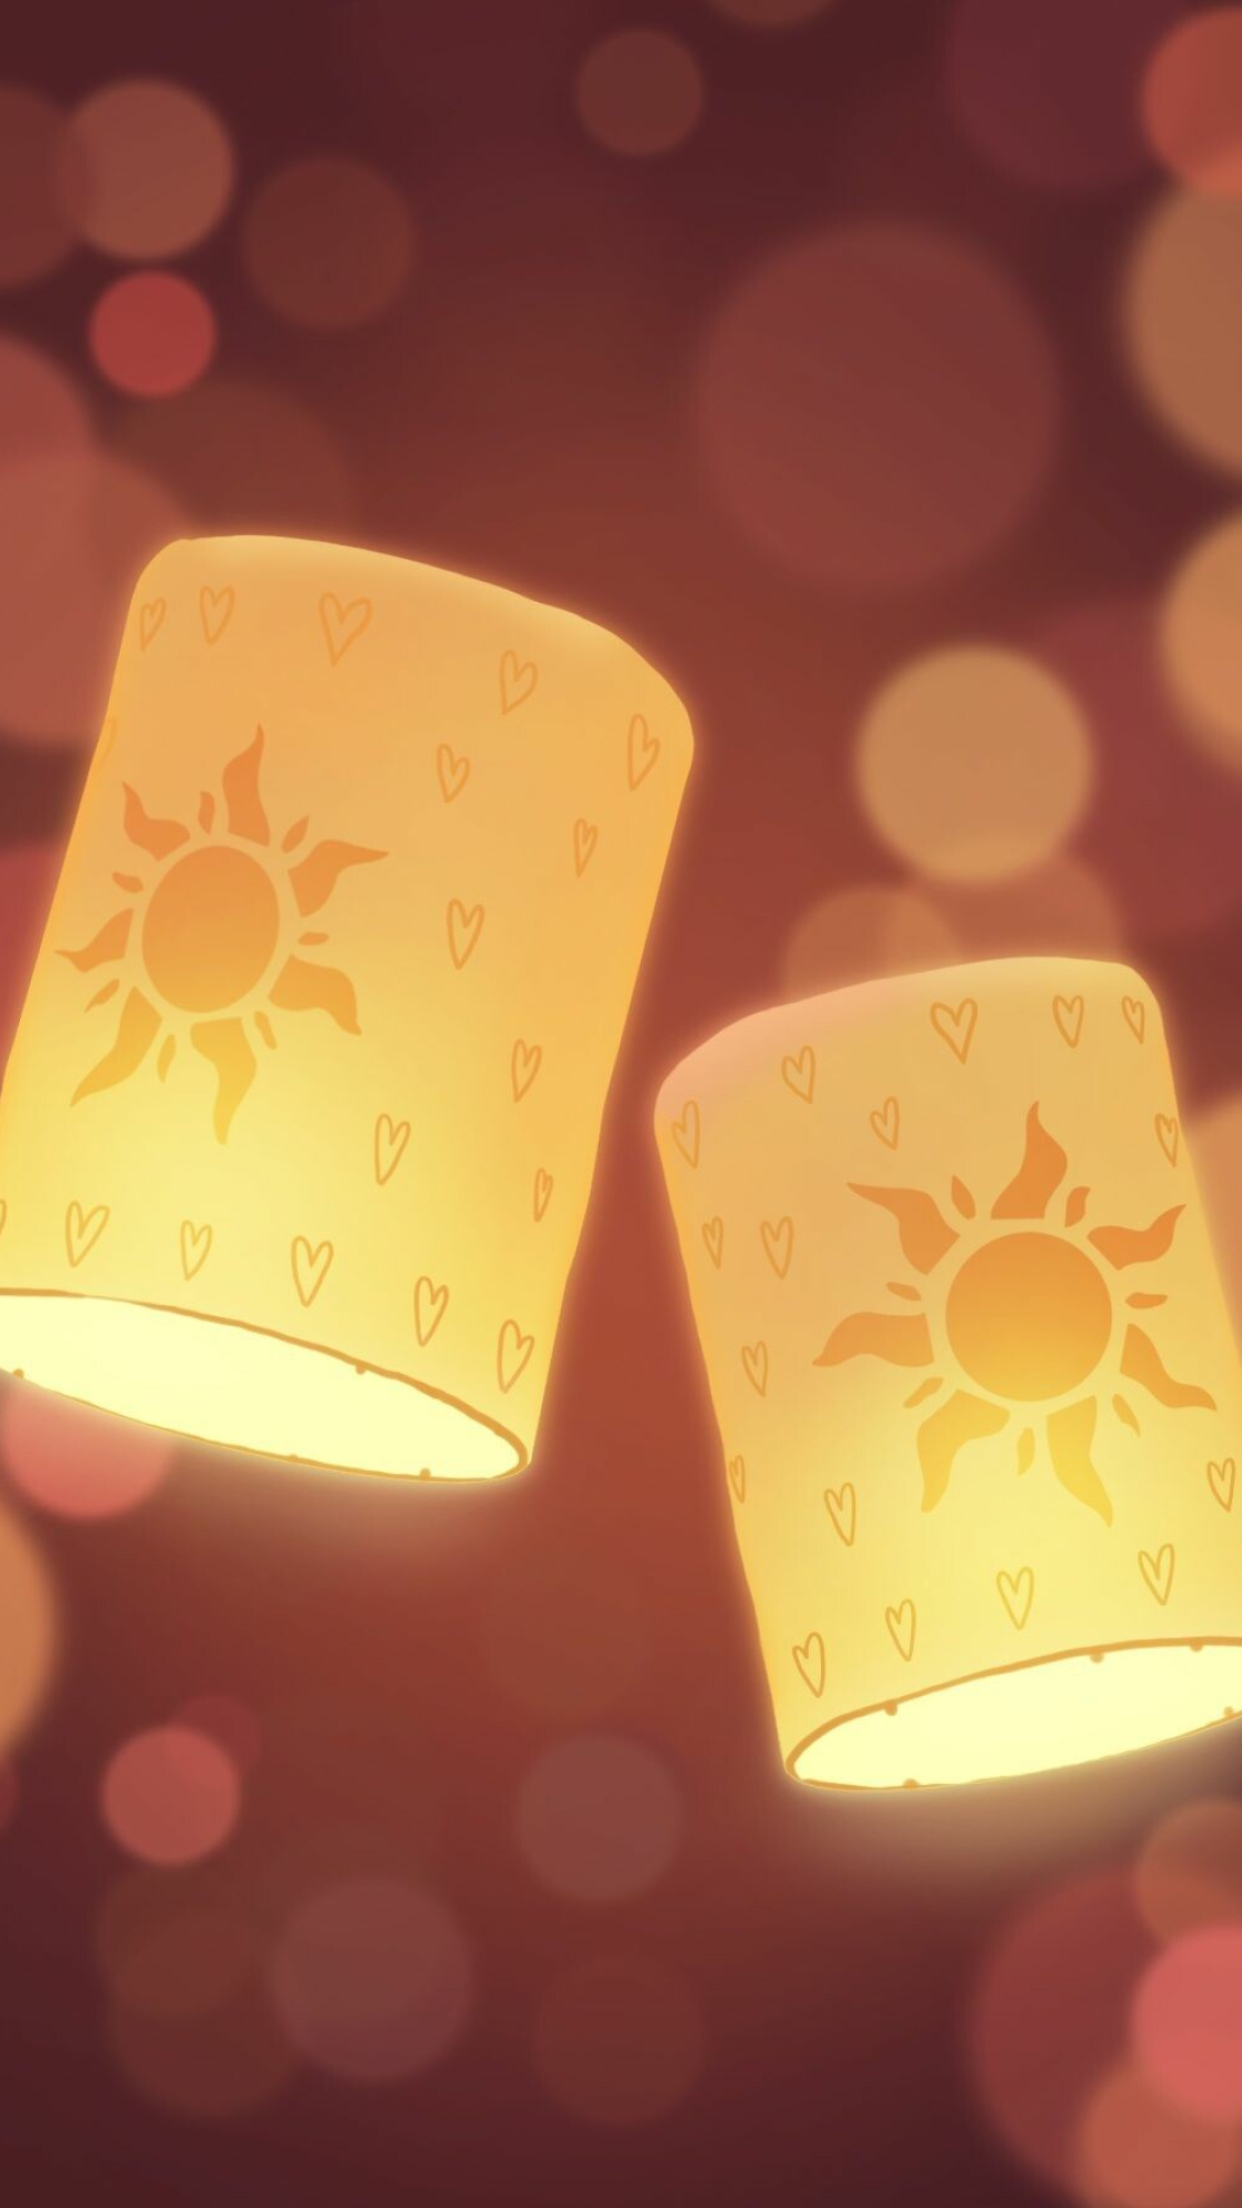 Lanterns: Lamp-containing case, Warm light, Flying lamp, Illumination. 1250x2210 HD Background.